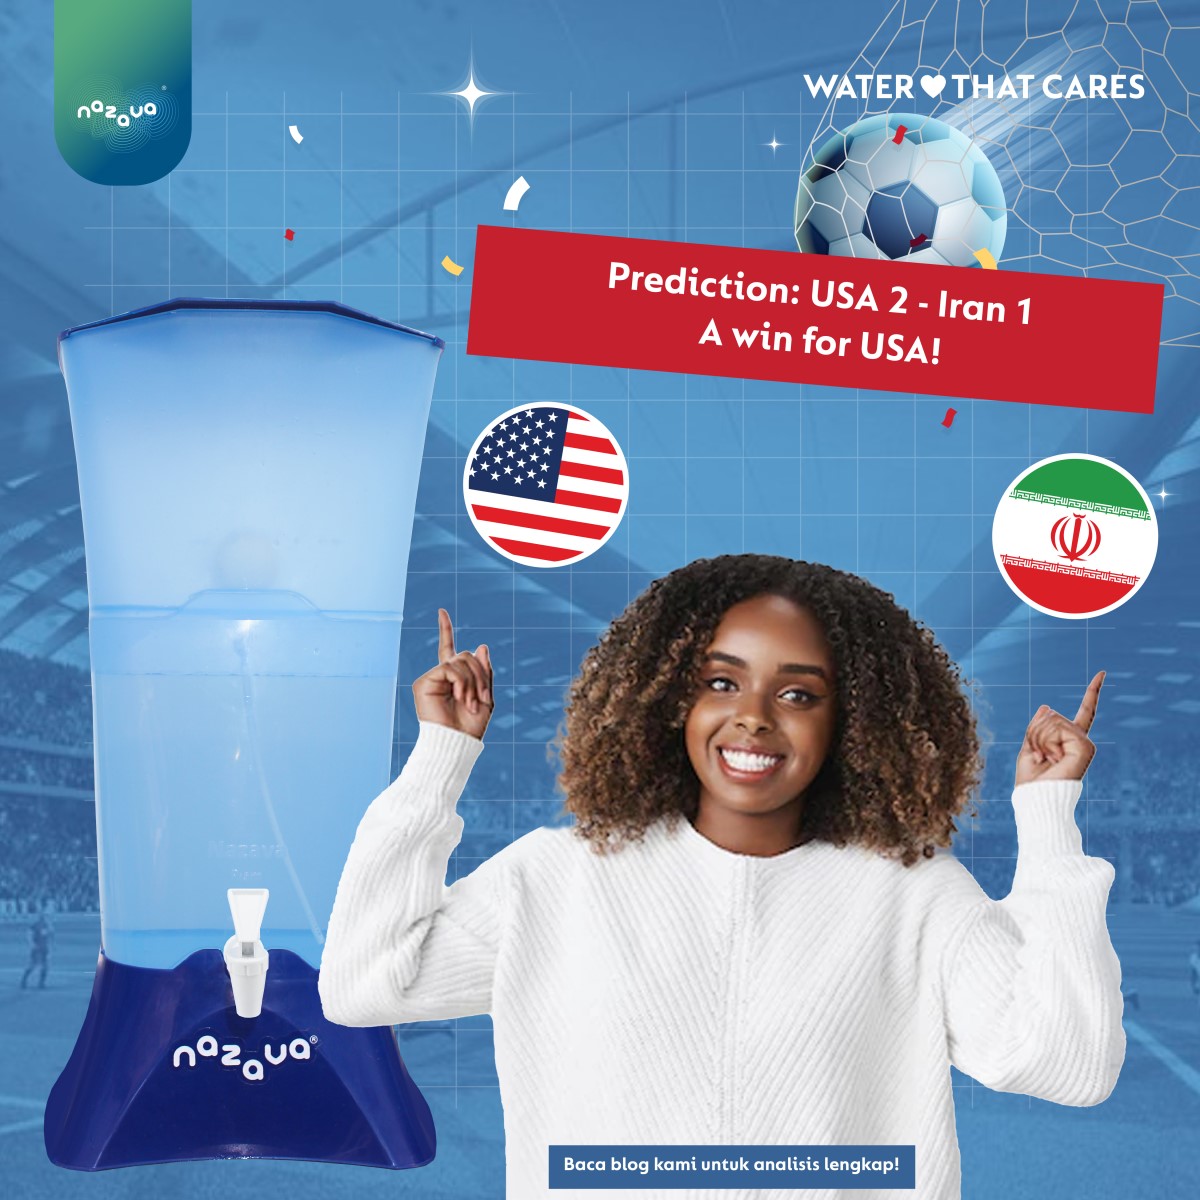 USA vs Iran usa wins based on access to sanitation and water